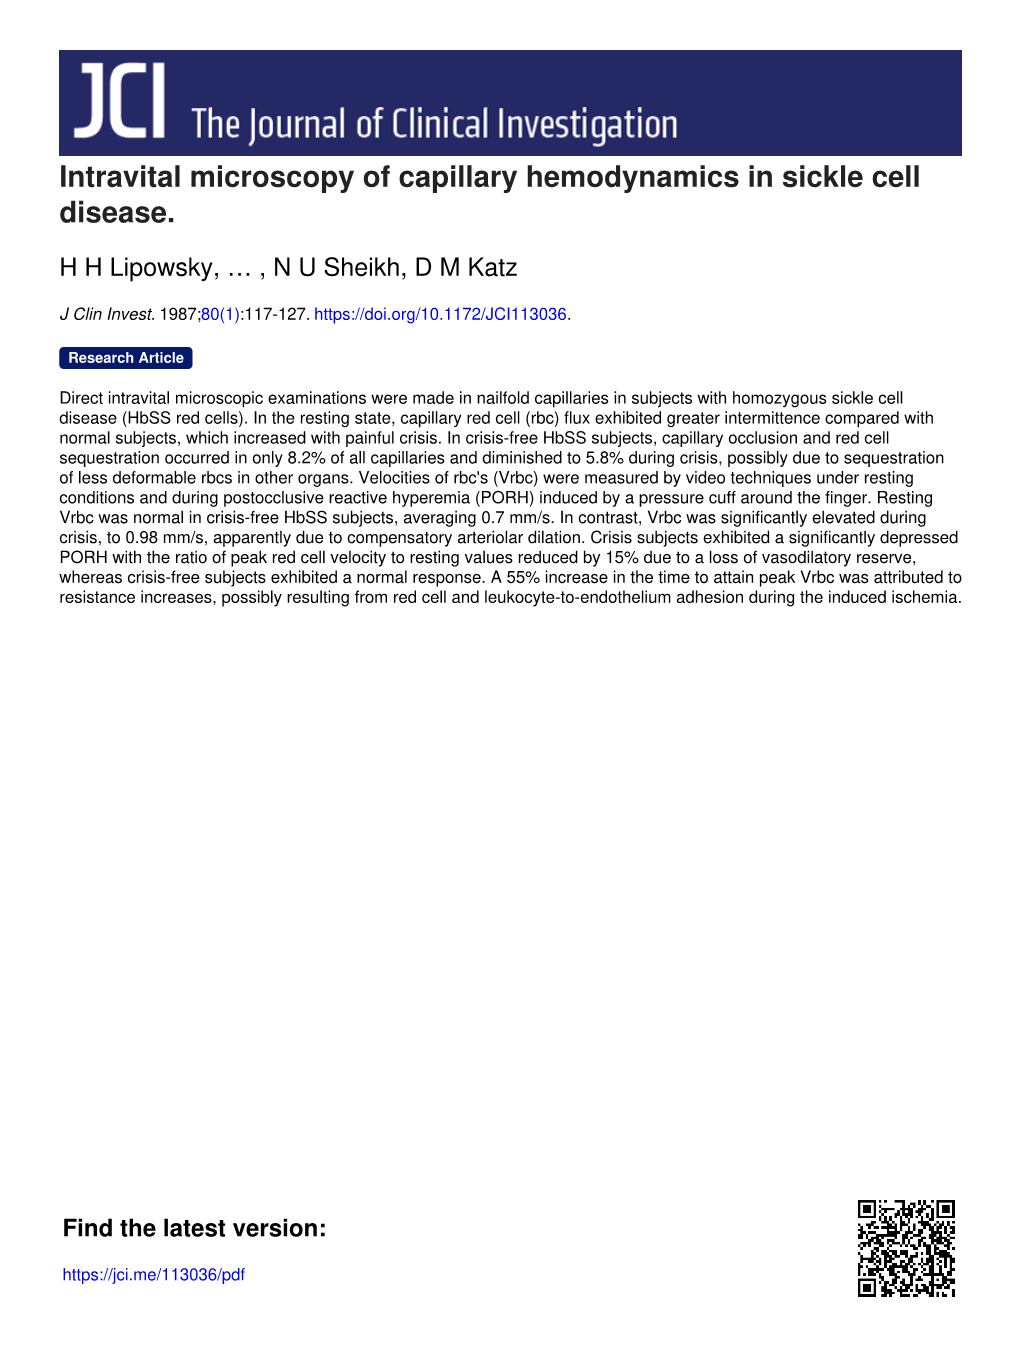 Intravital Microscopy of Capillary Hemodynamics in Sickle Cell Disease